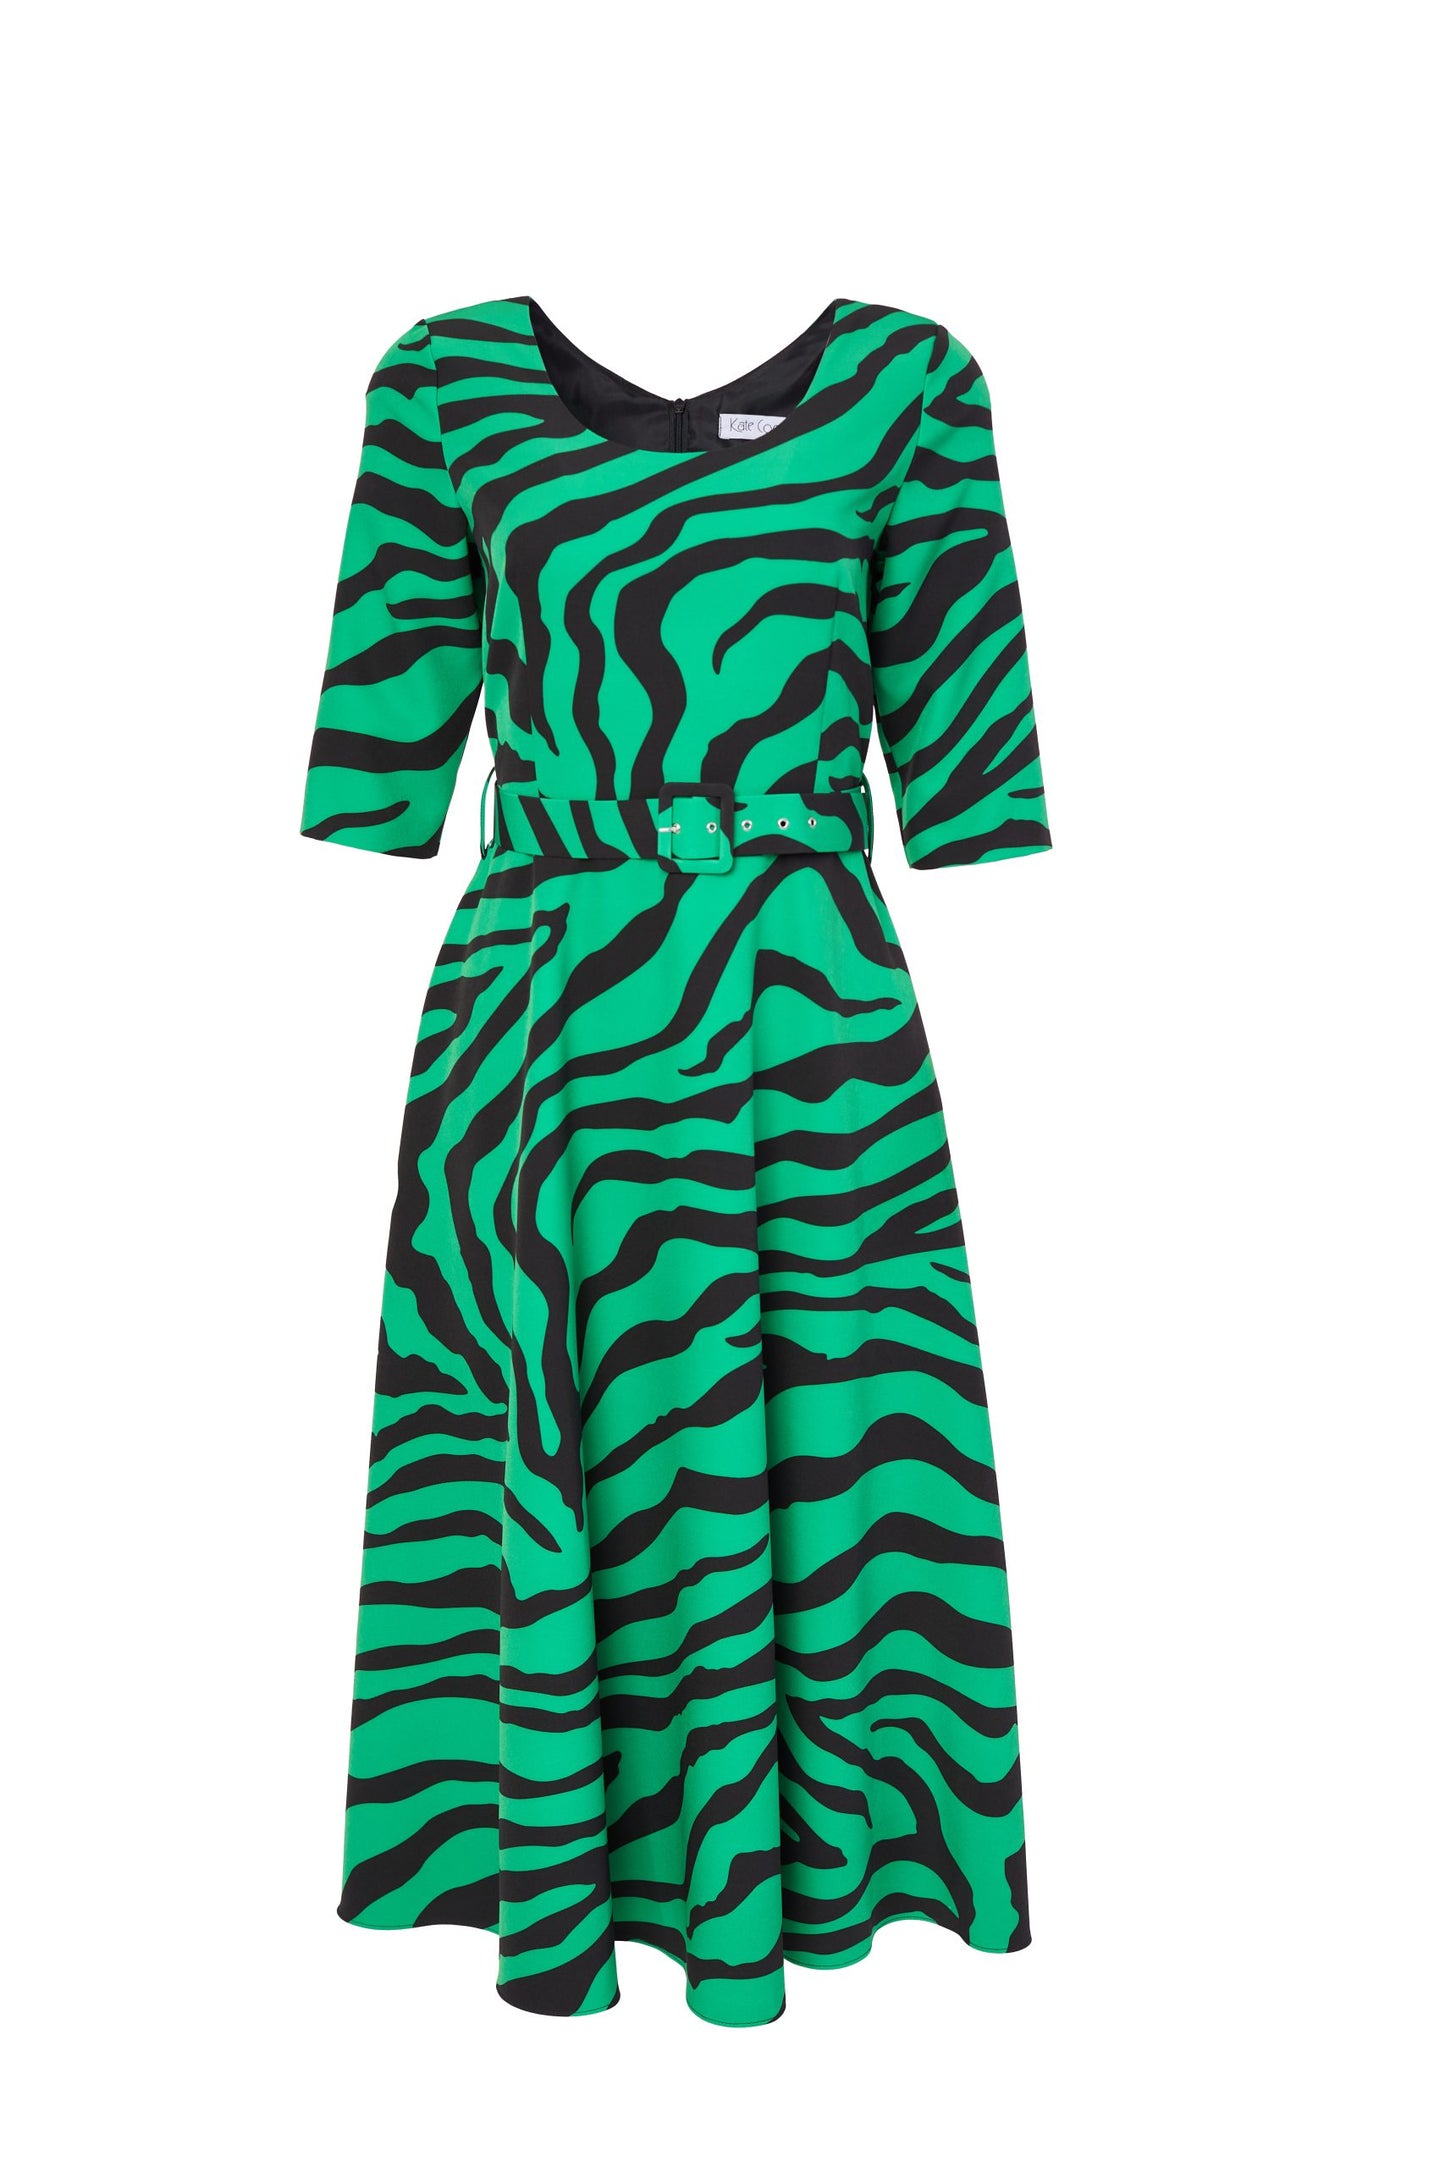 Green &Black Print Dress